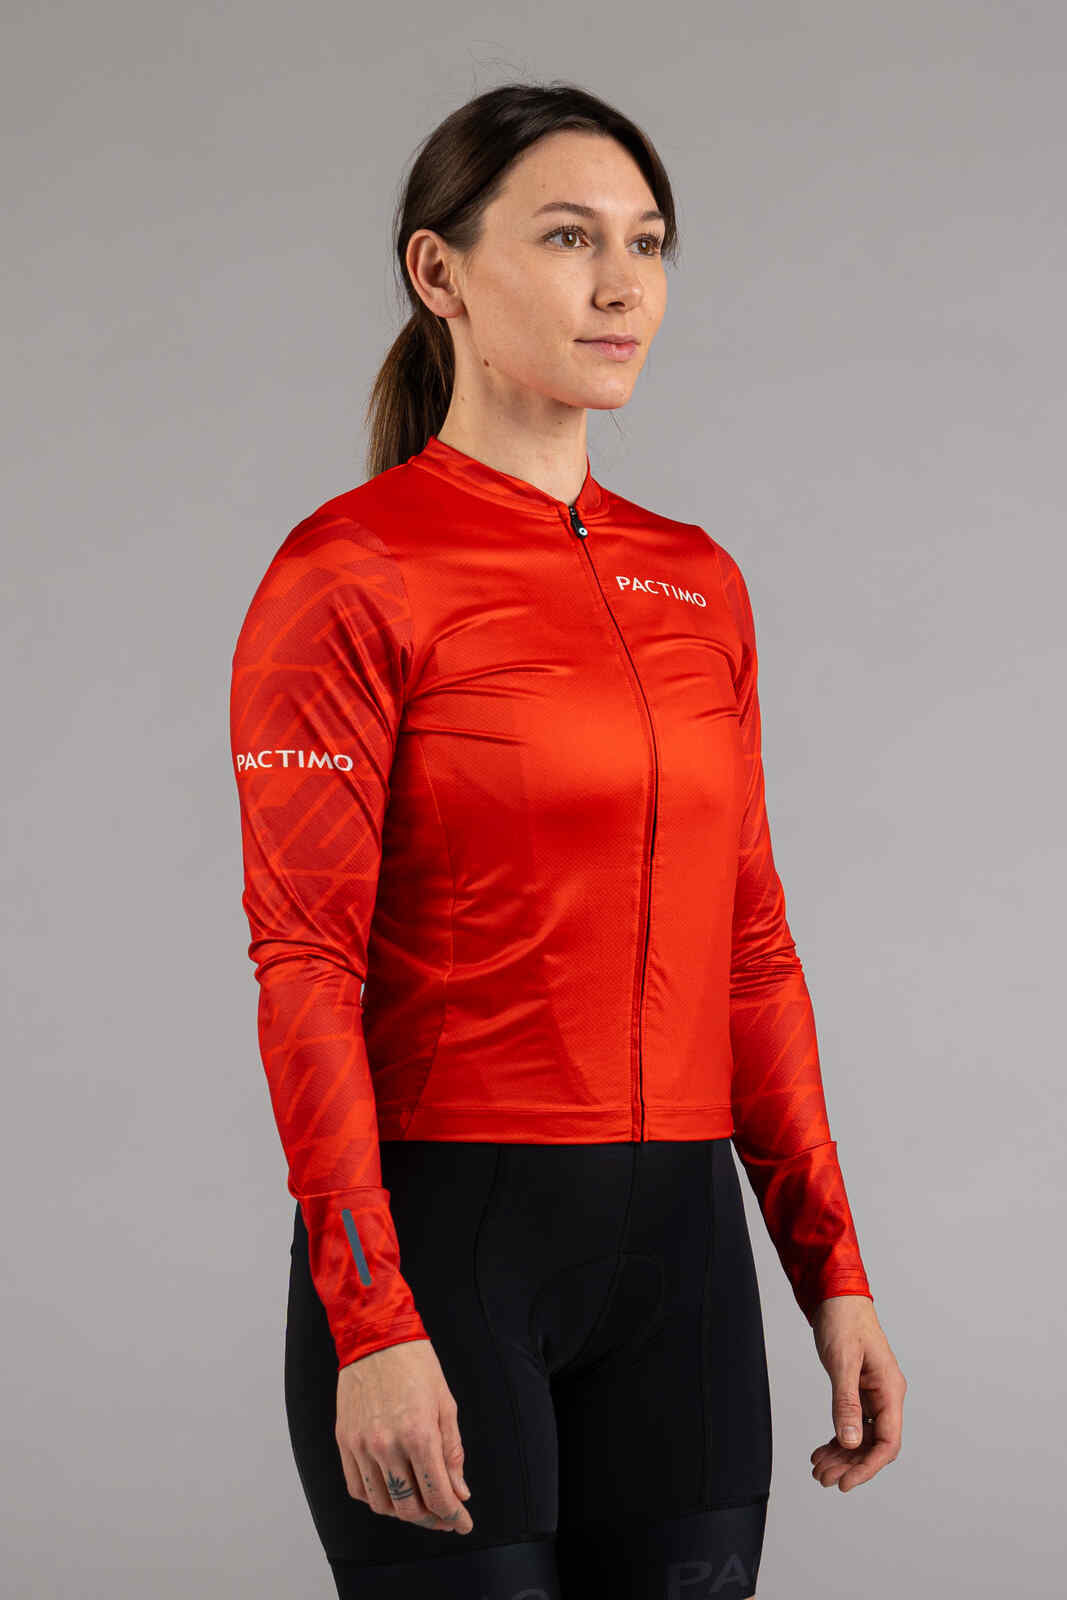 Women's Long Sleeve Red Bike Jersey - Front View